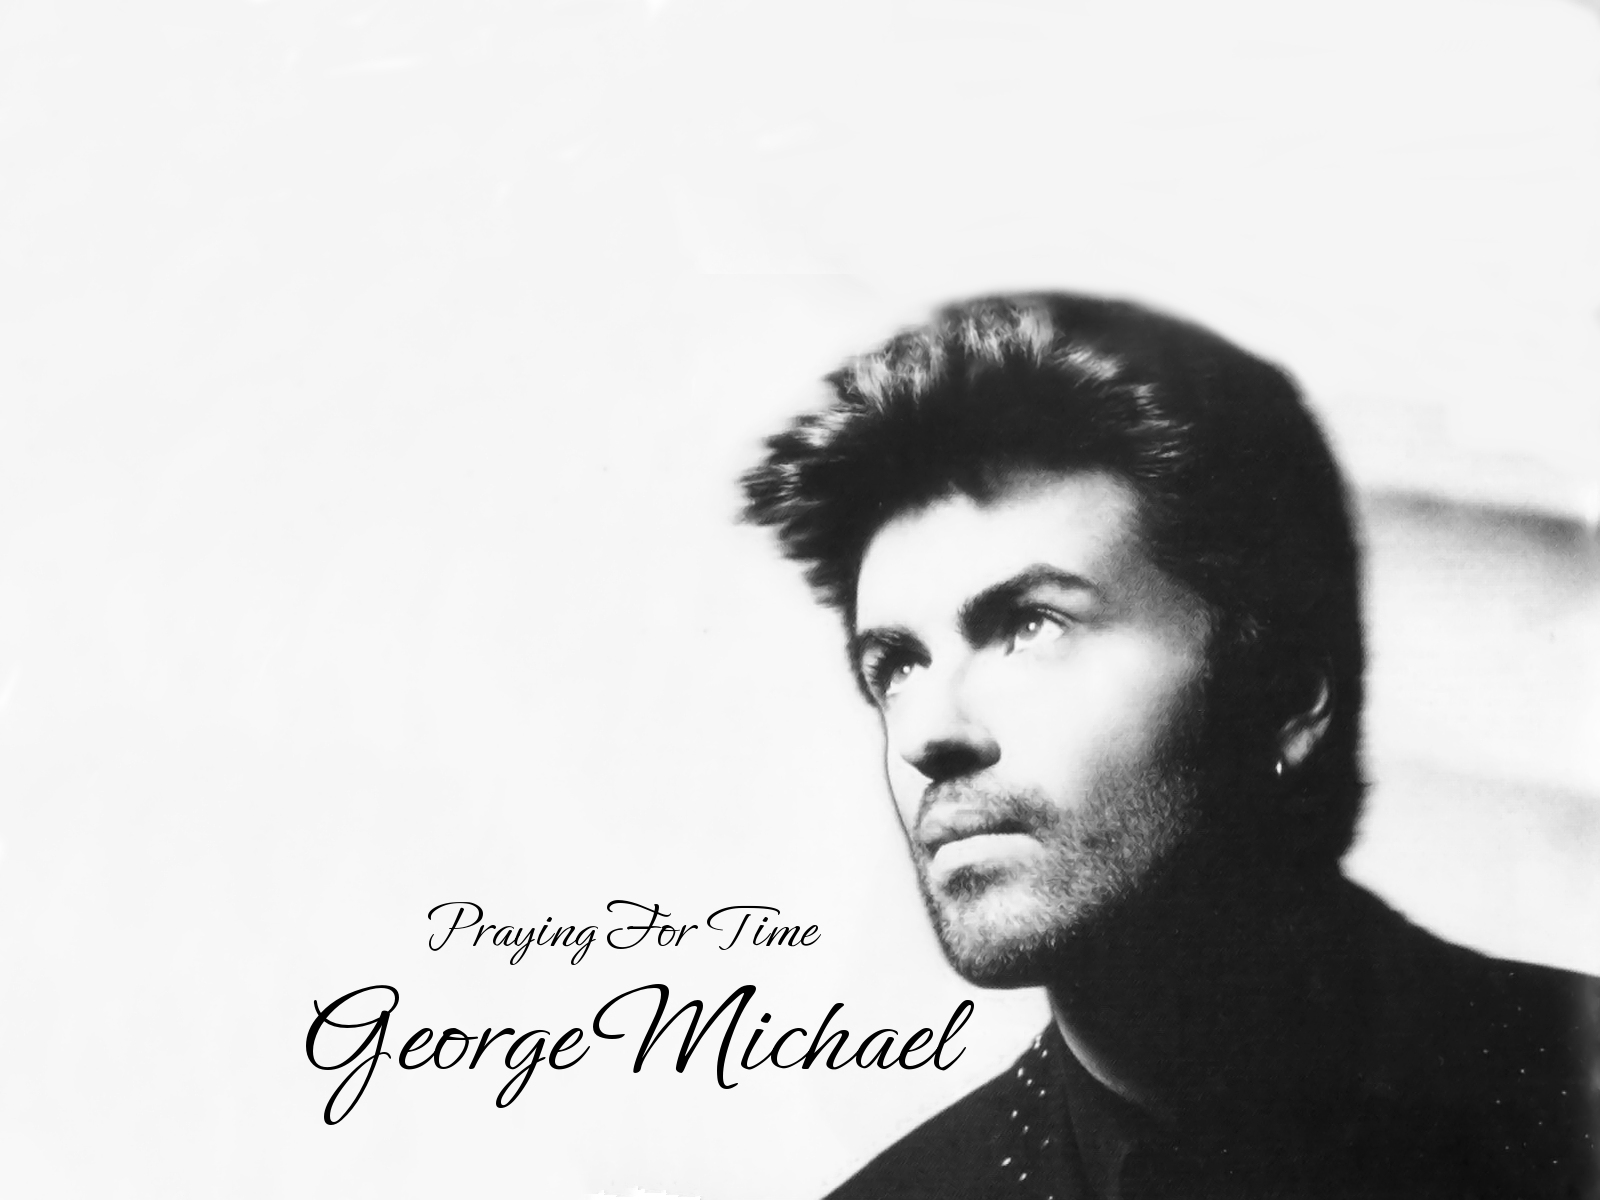 carta da parati george,capelli,fotografia,acconciatura,copertina,testo